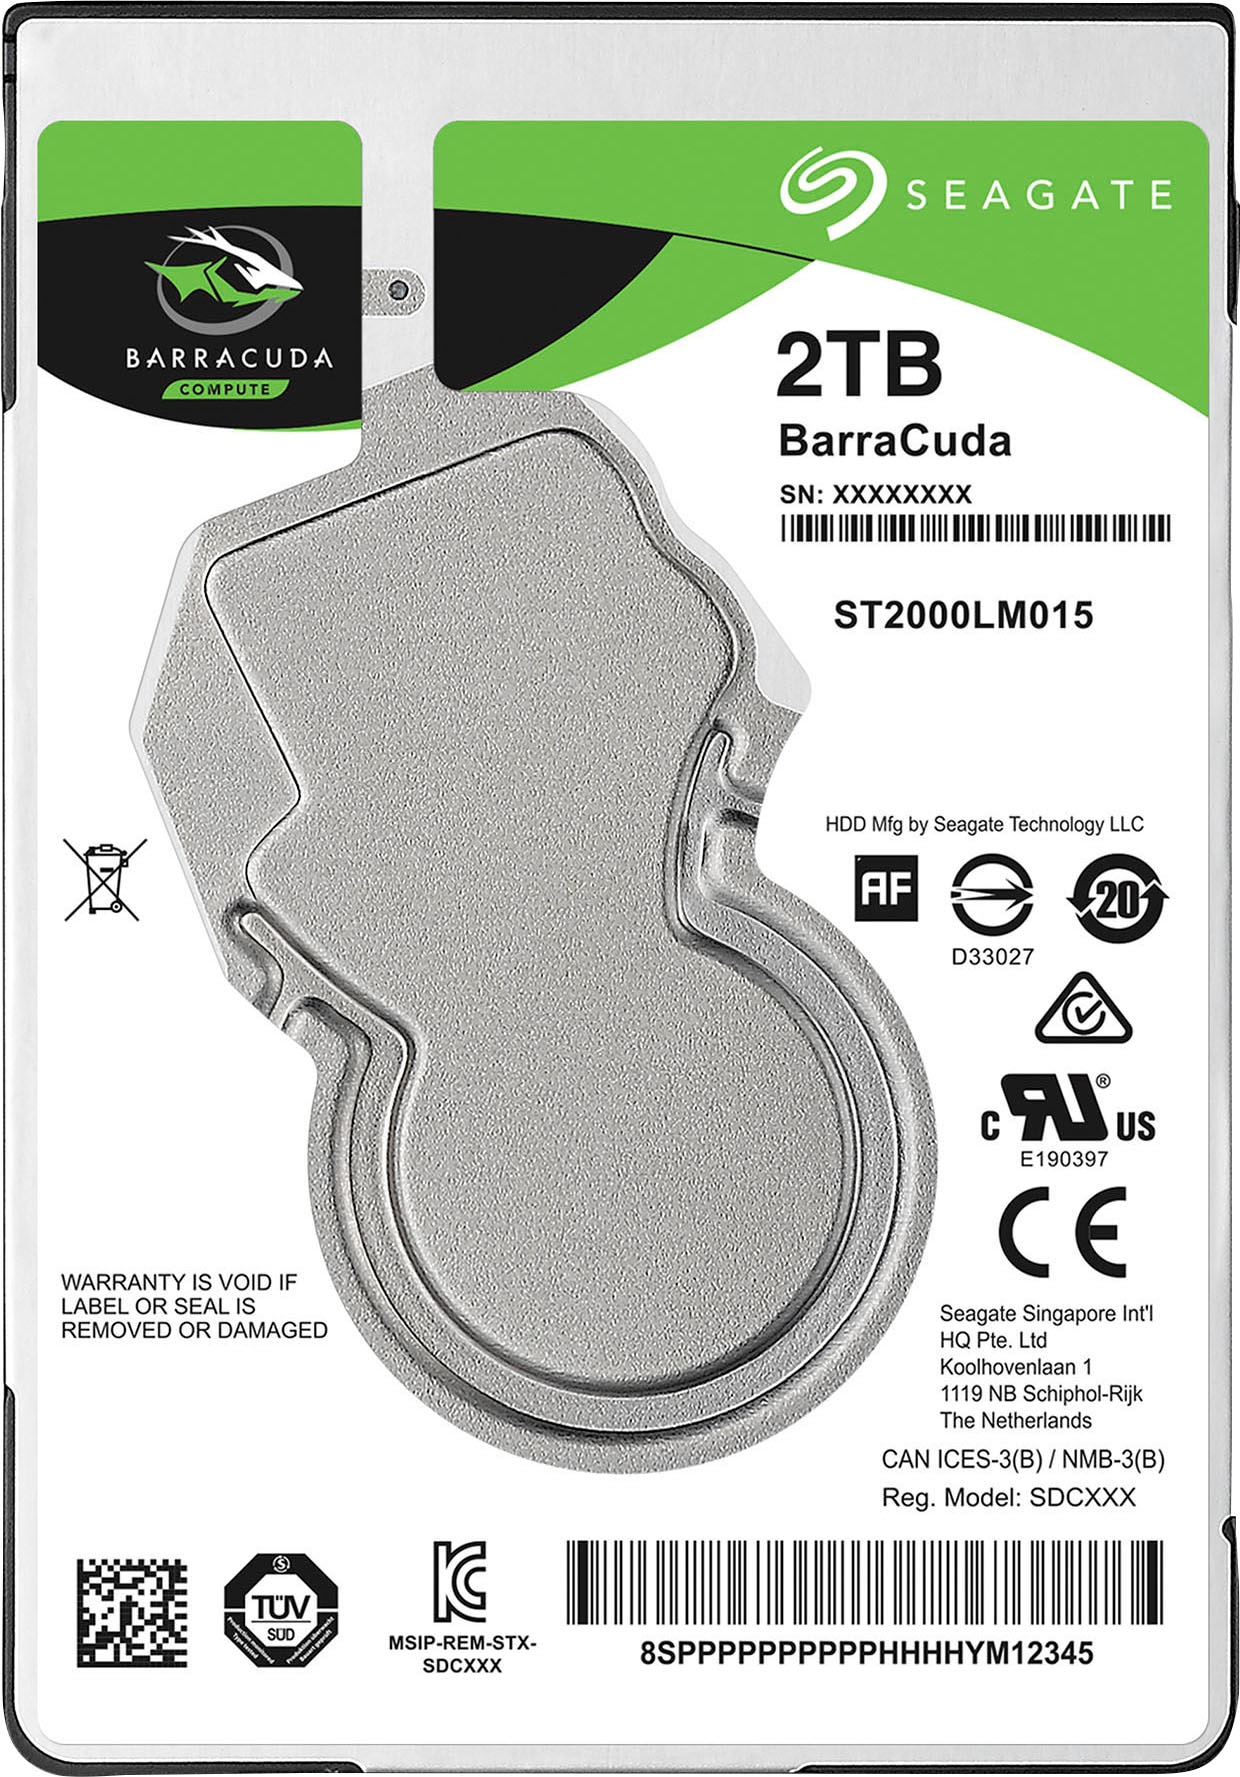 Seagate HDD-Festplatte »BarraCuda Mobile«, 2,5 Zoll, Anschluss SATA II, Bulk